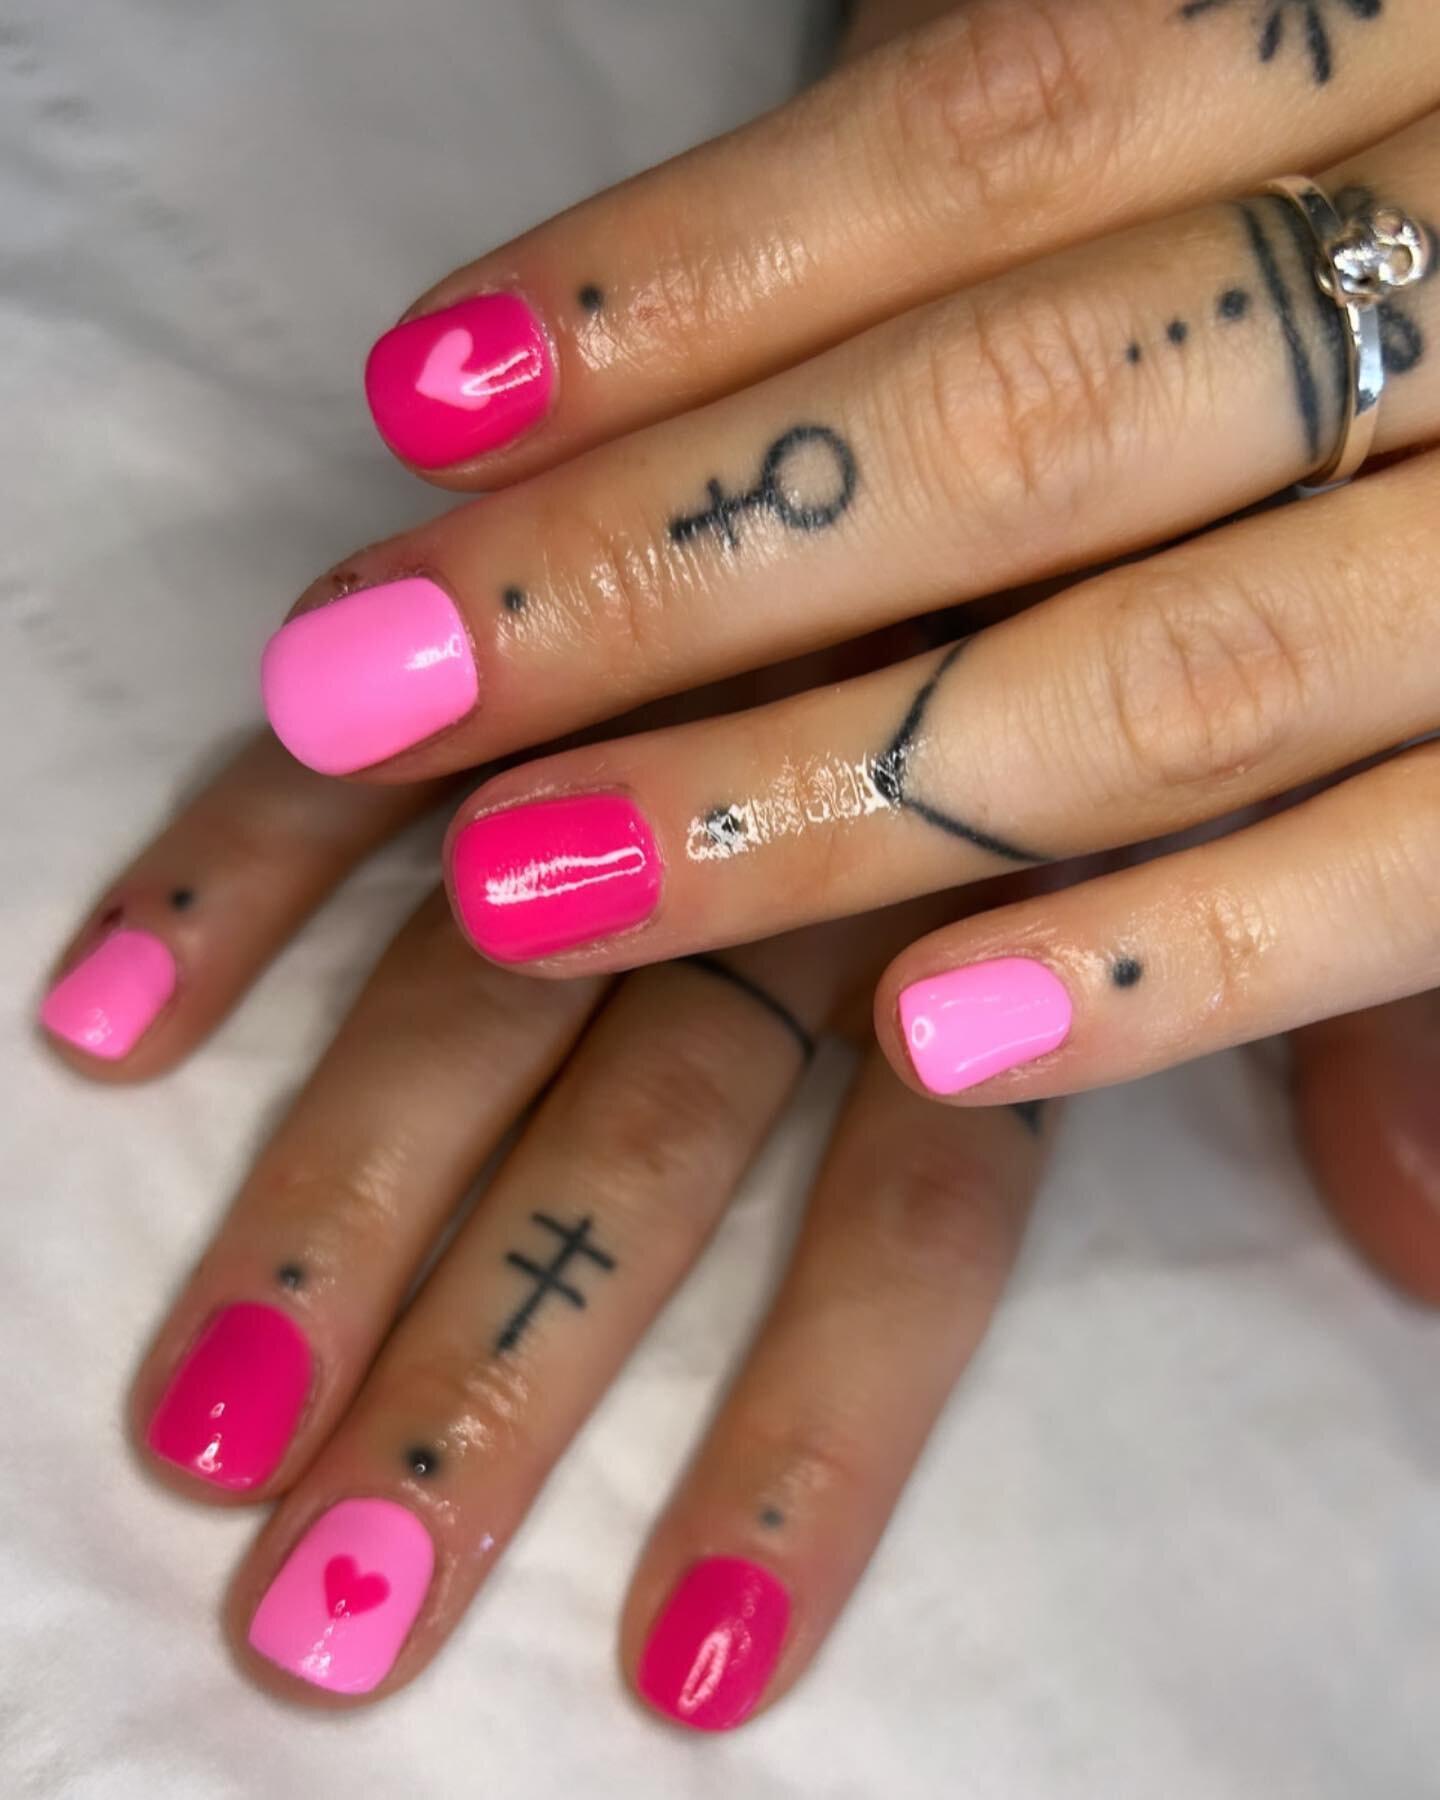 Pink To Make The Boys Wink 💗 Bright Colours For The Bank Holiday Weekend By Nail Tech Brooke.

#pinknails #pinknails💅 #gel #gelnails #gelnailsdesign #gelpolish #manicure #beauty #beautysalon #essex #rainham #gelnailsdesign #beautytips #biab #biabna